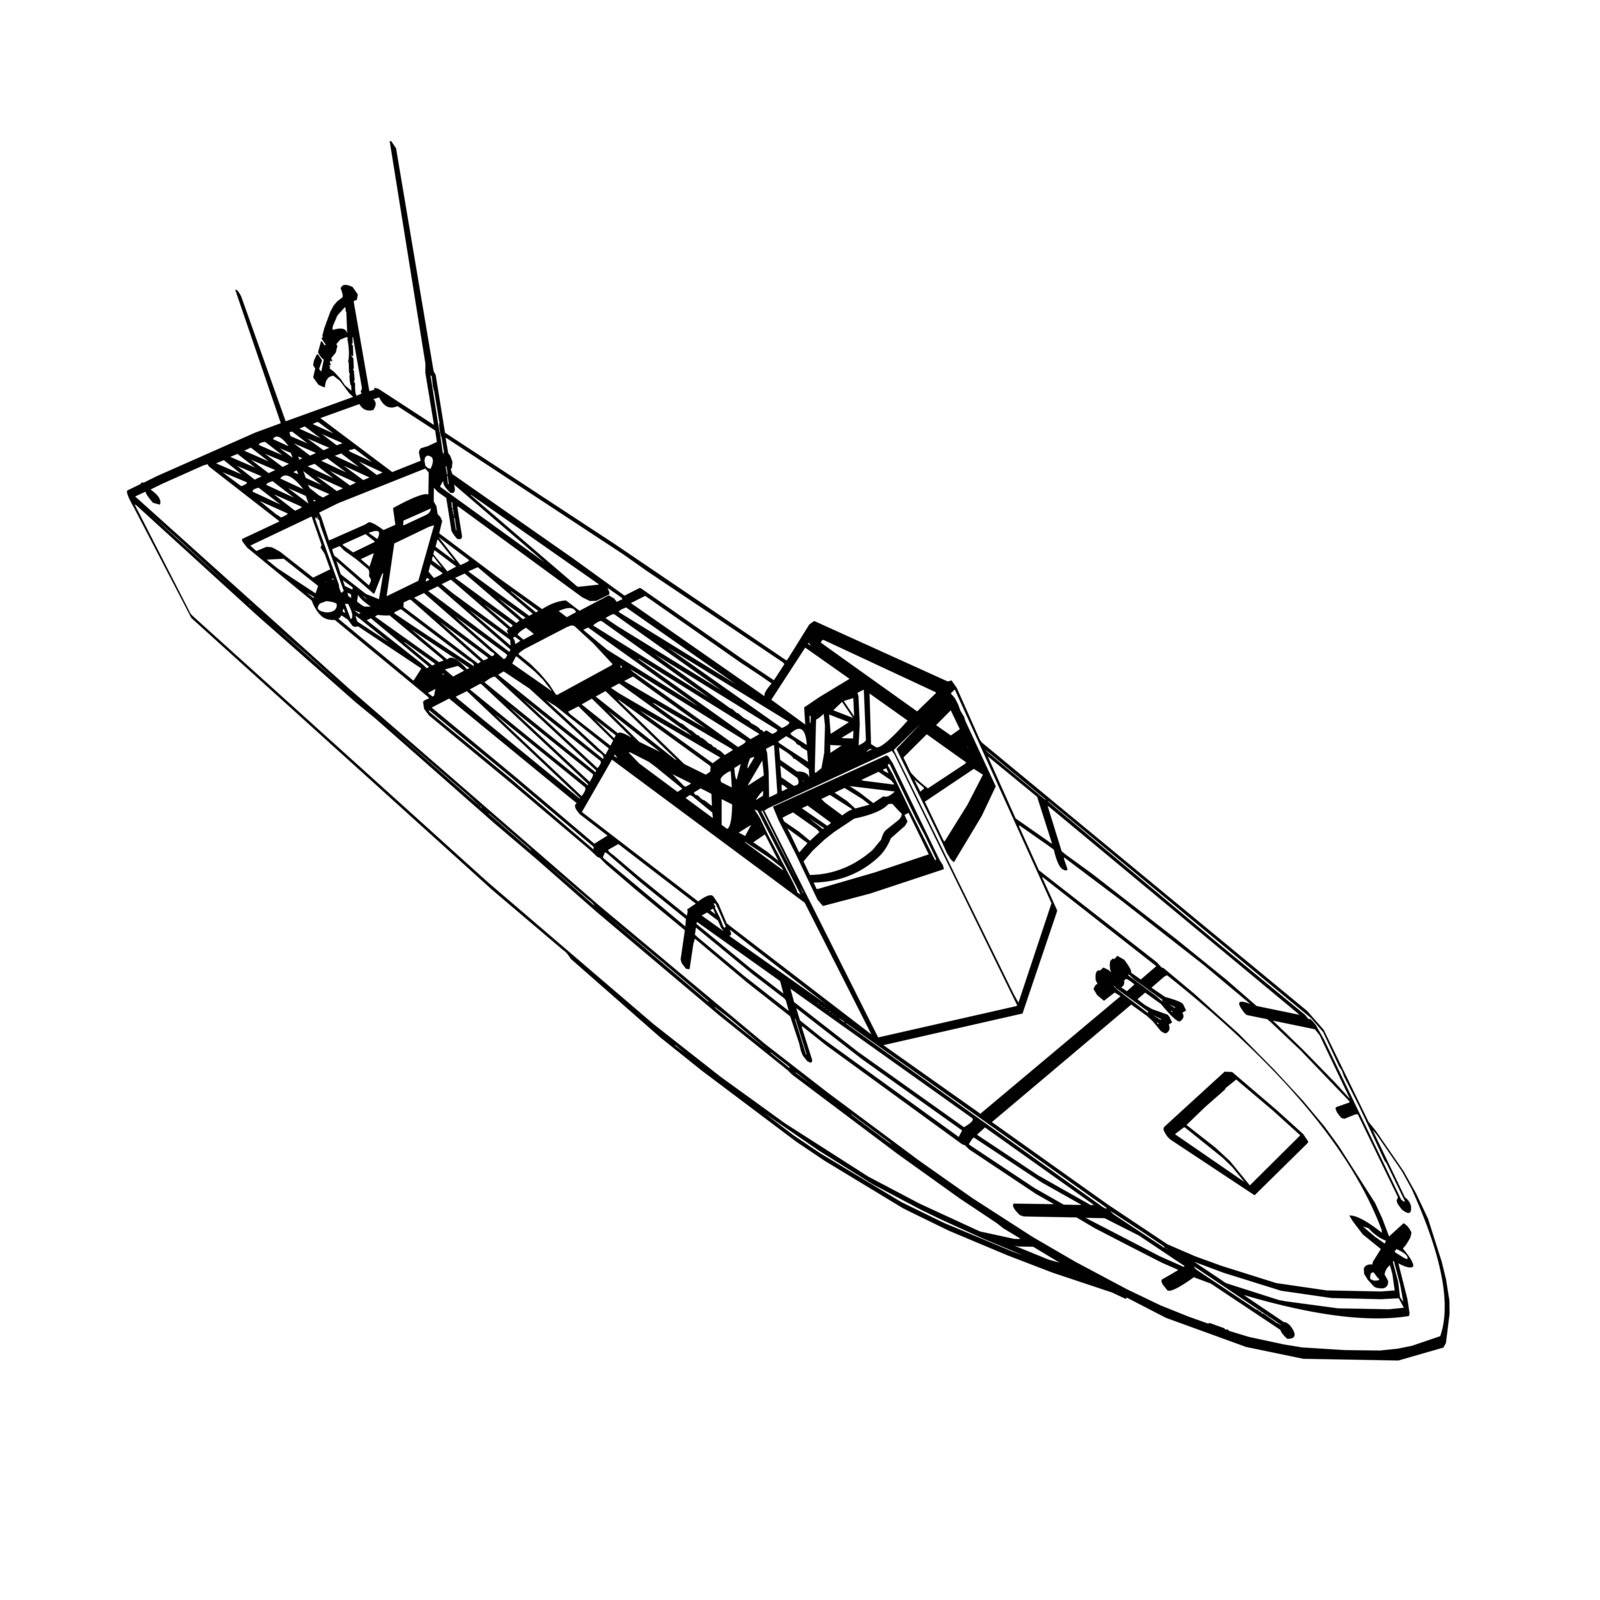 Motor fishing boat isolated on white. Vector illustration.